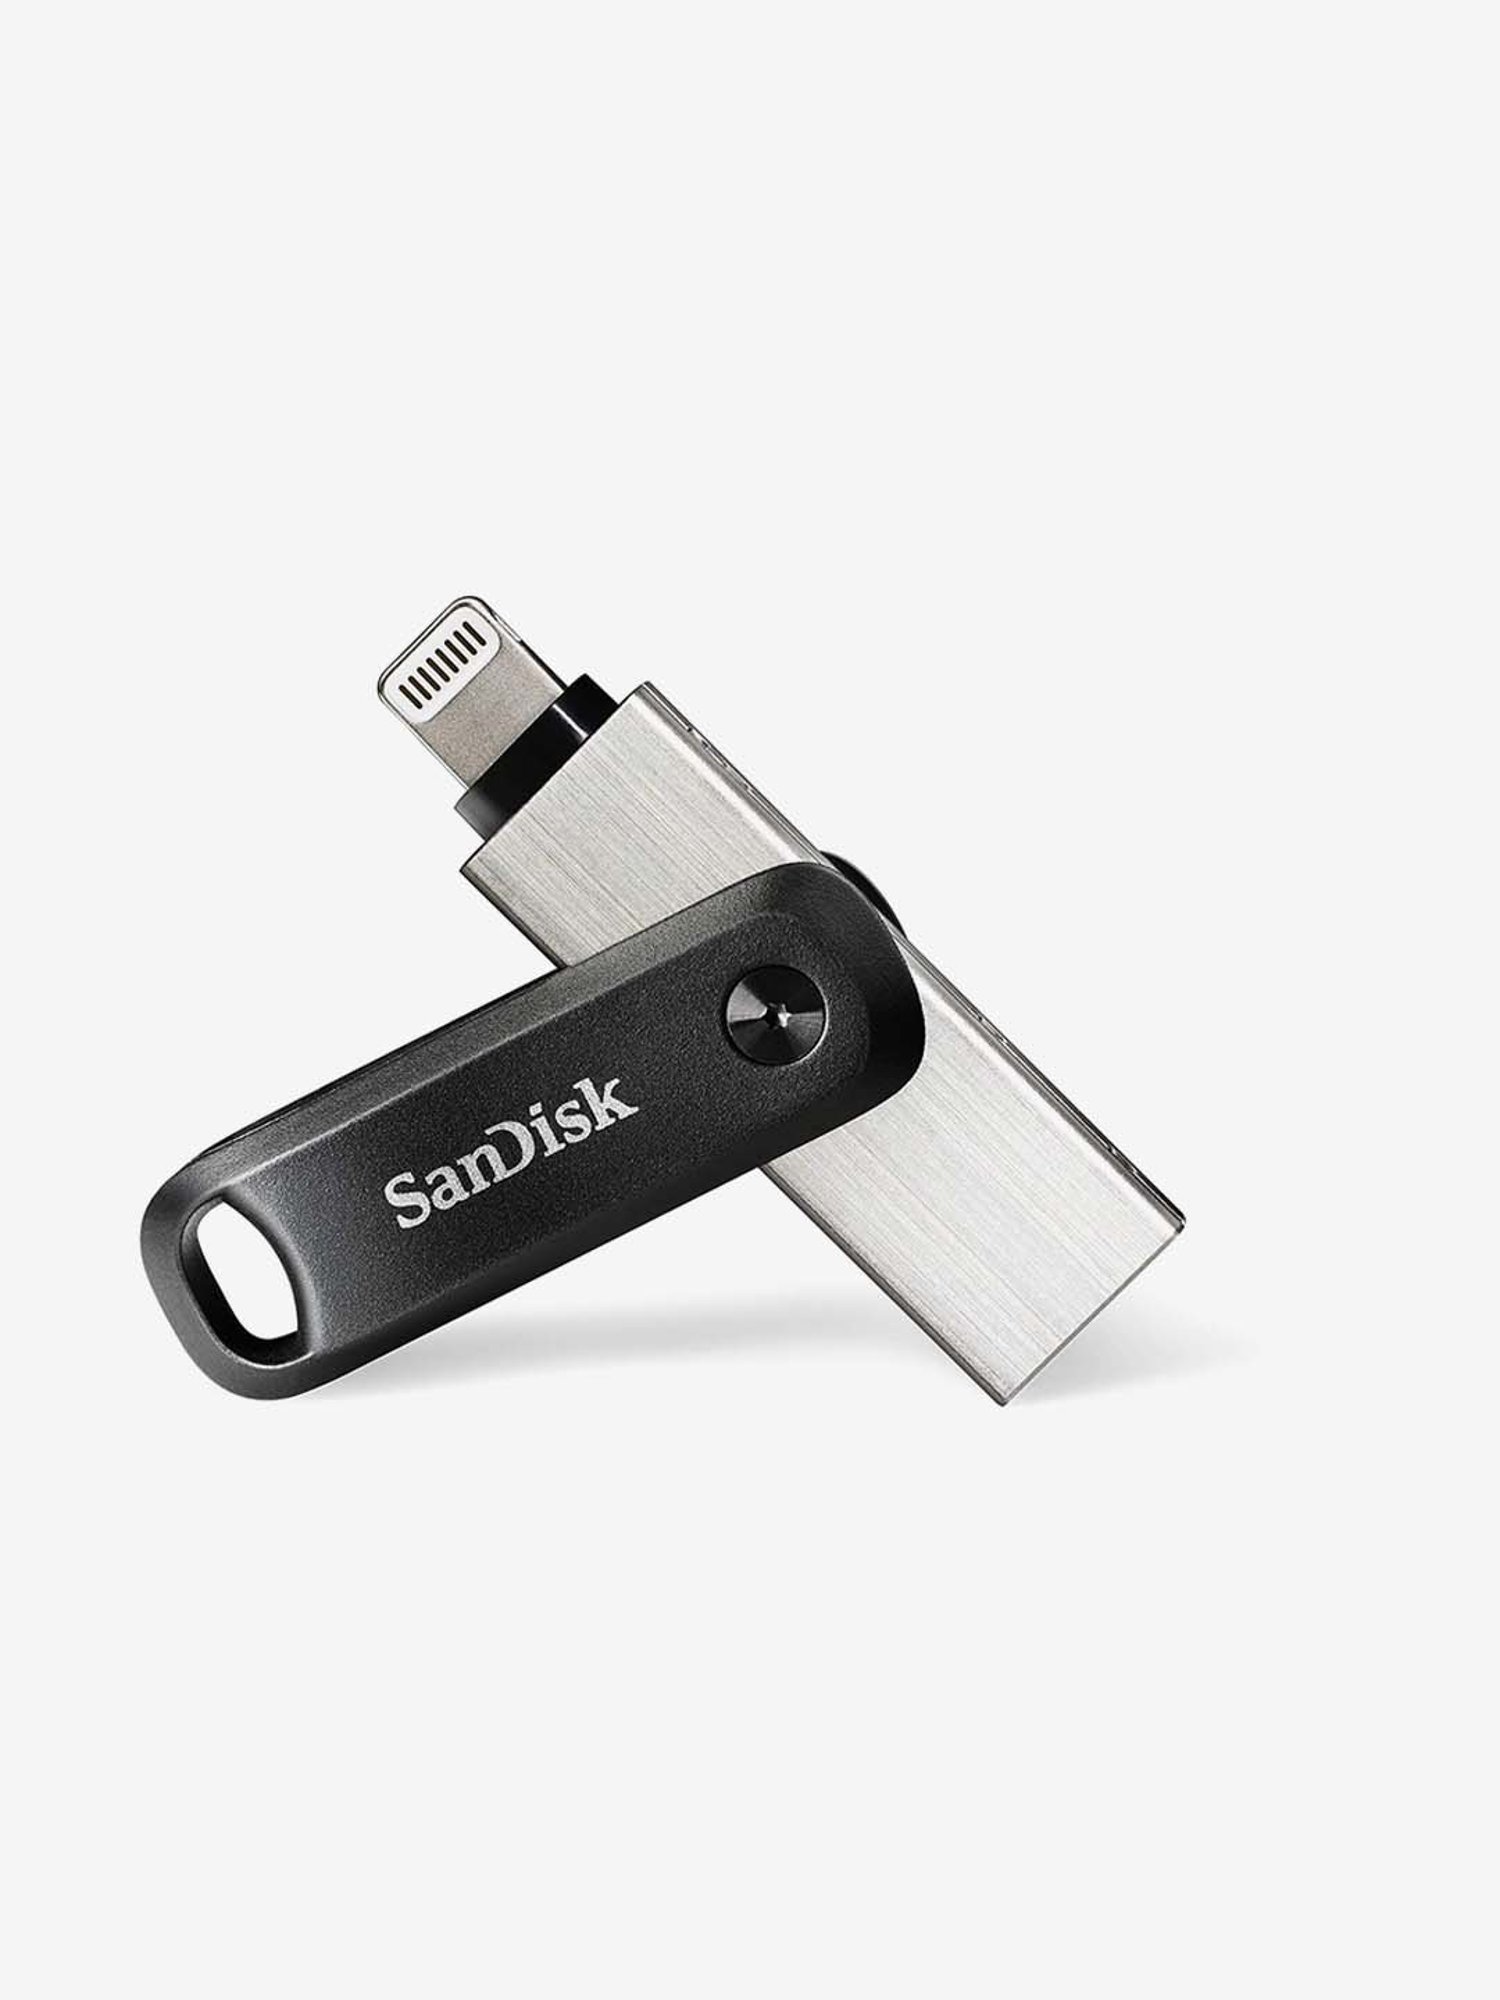 SanDisk 128GB iXpand USB Flash Drive Flip SDIX90N-128G 海外パッケージ品 驚きの値段で - USB メモリ